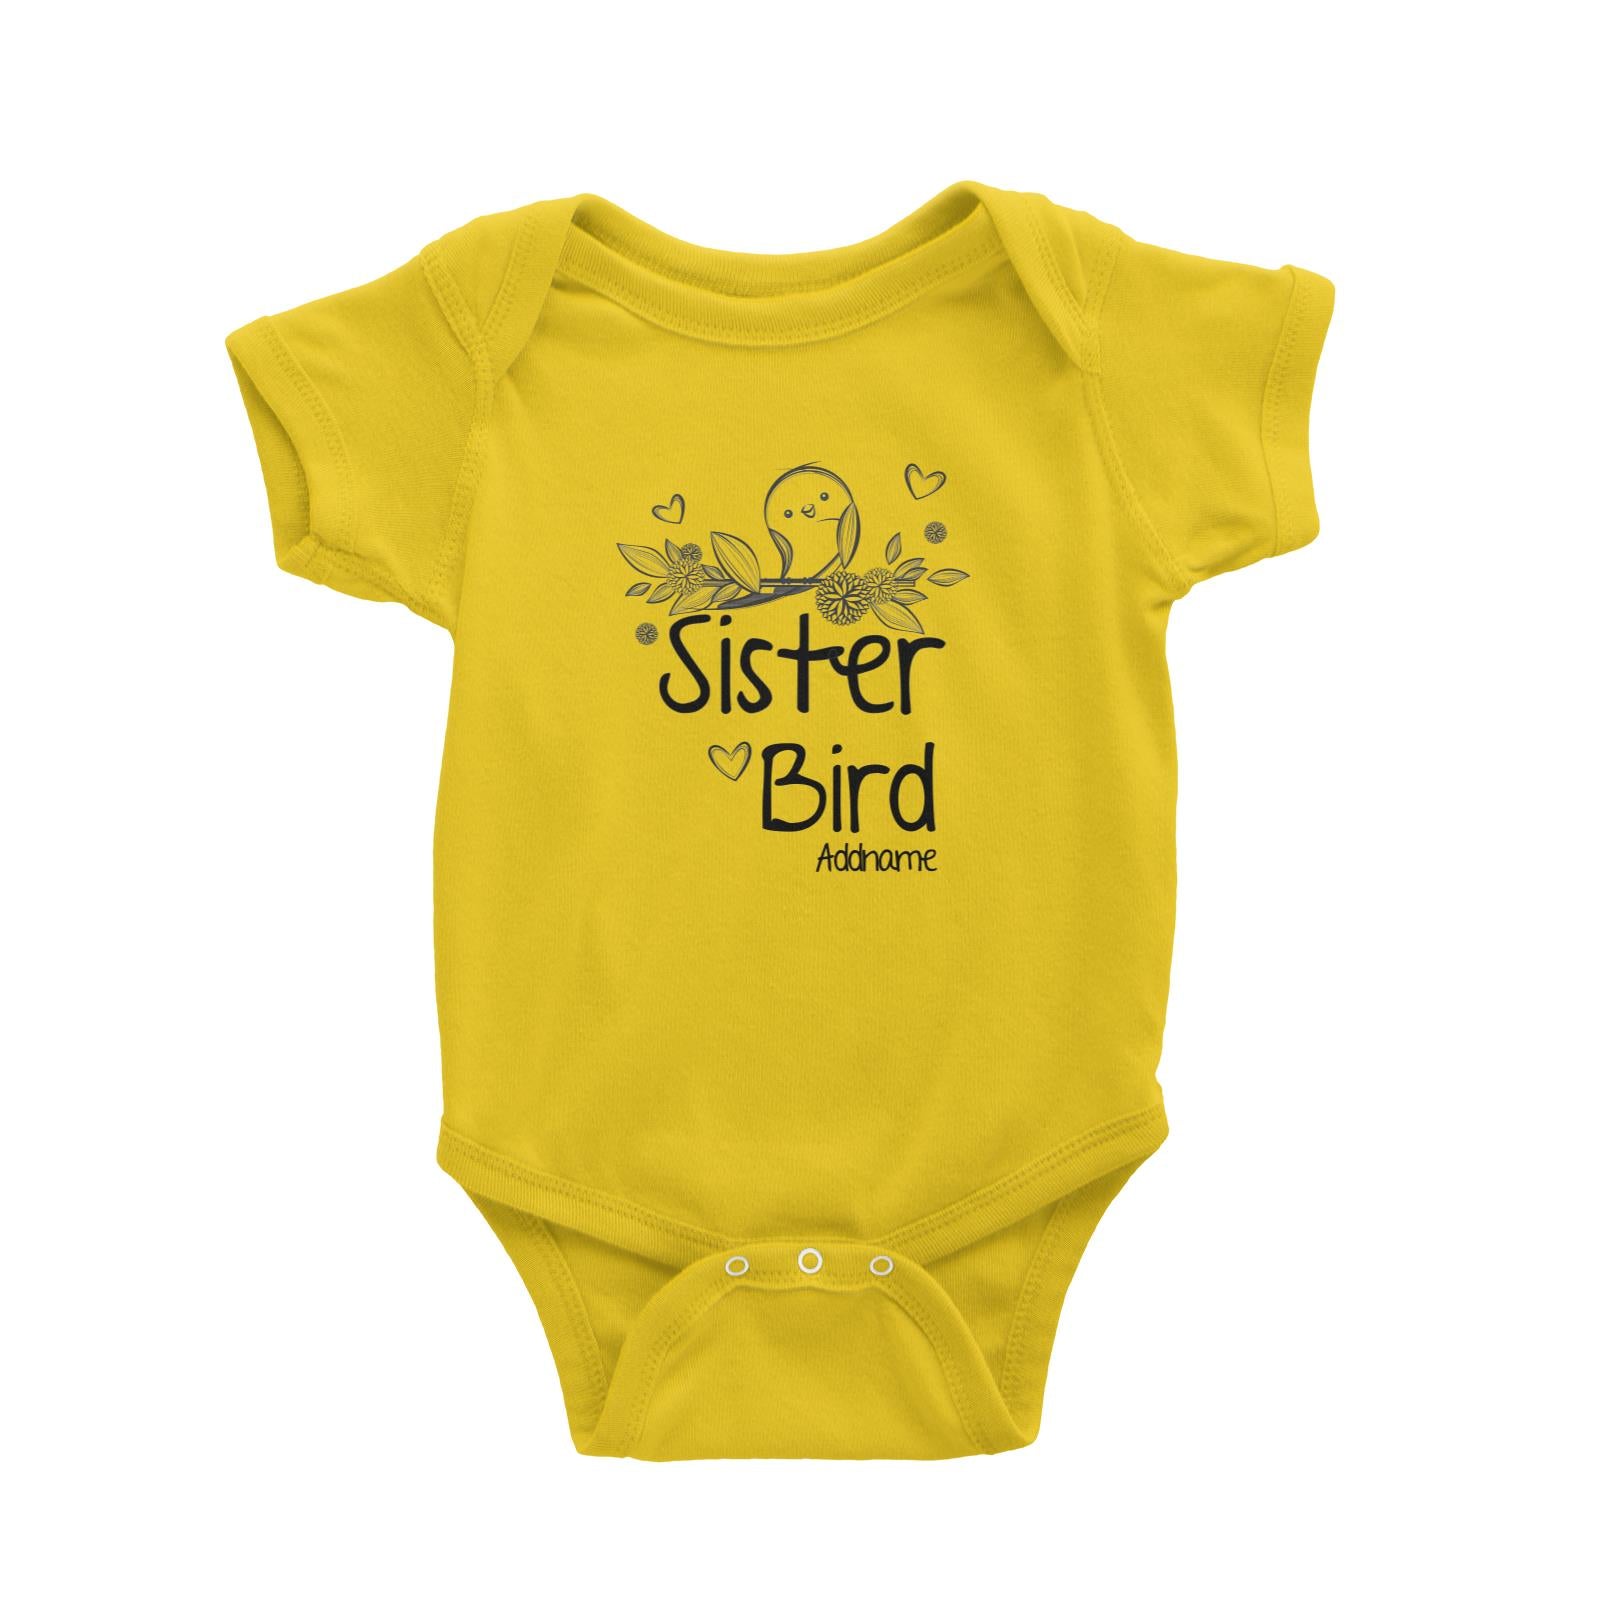 Sister Bird Baby Romper